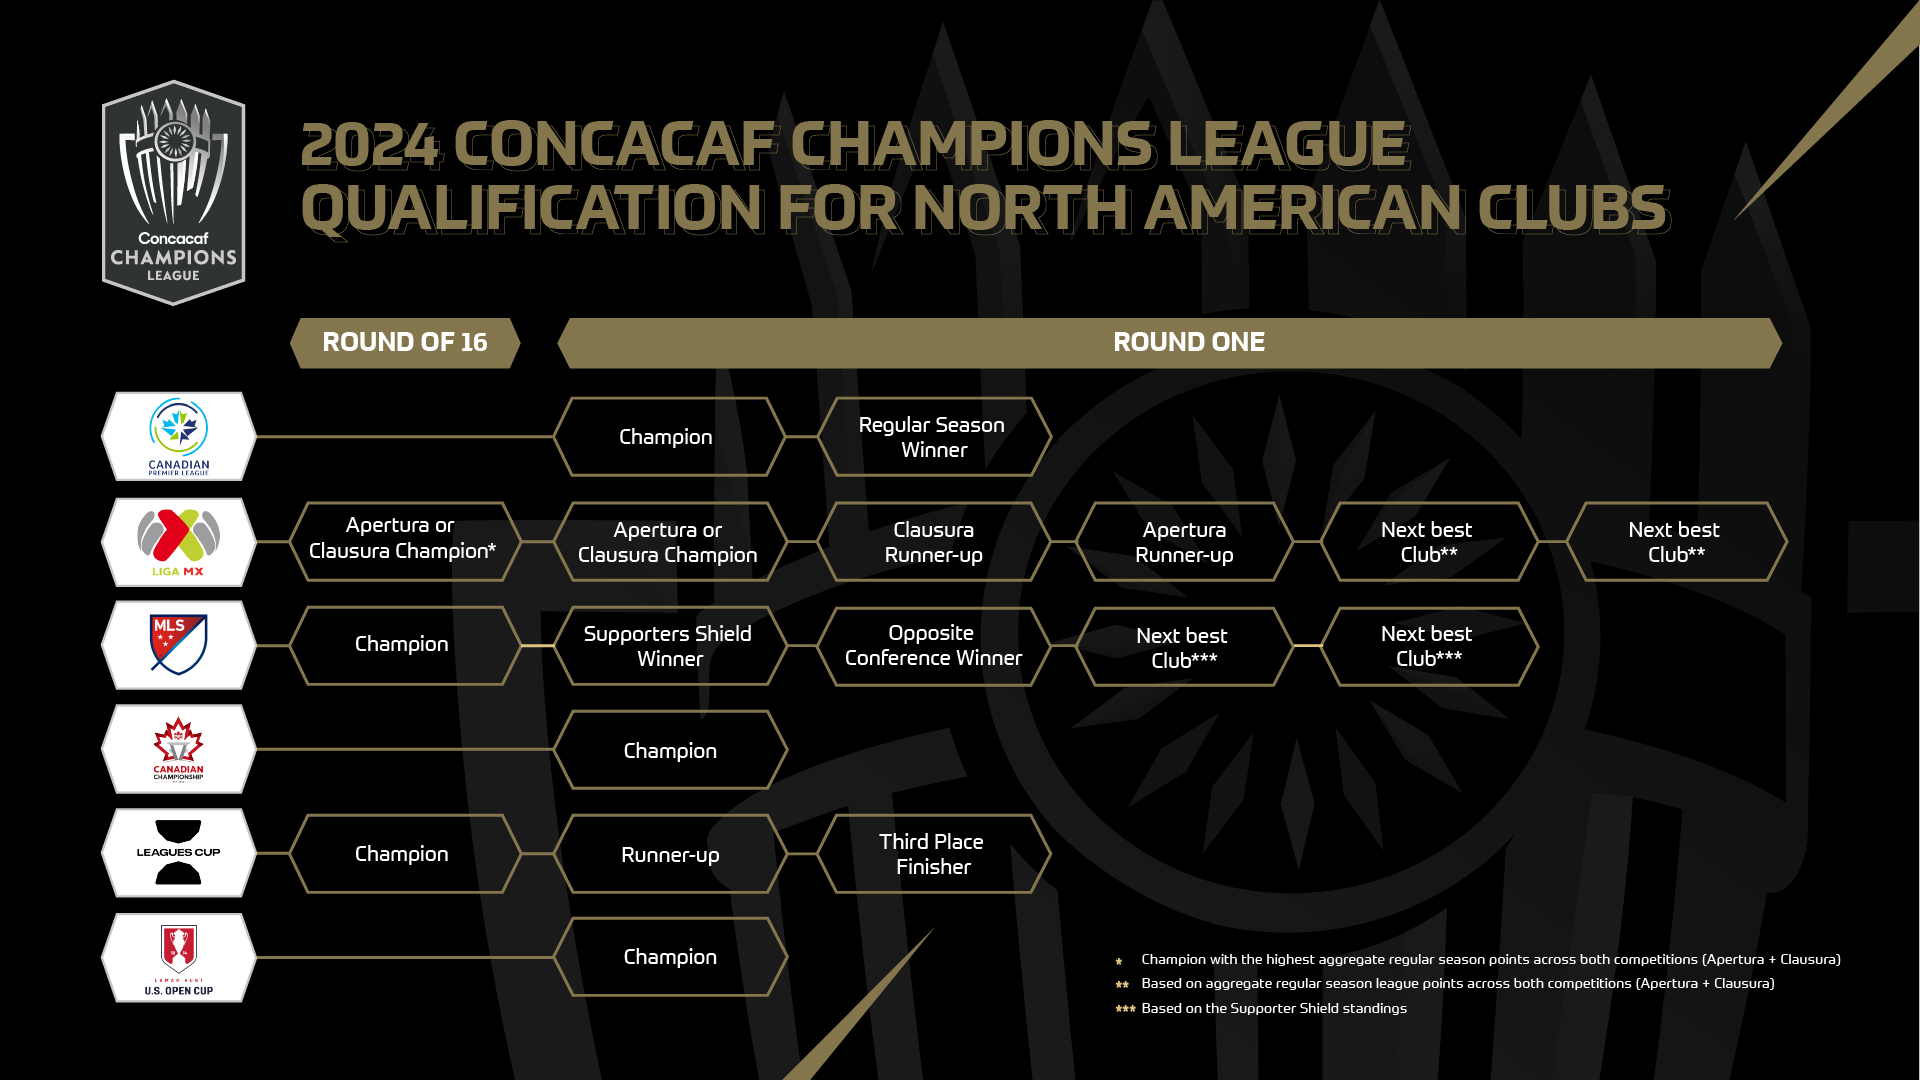 Concacaf announces qualification criteria for Confederation’s expanded